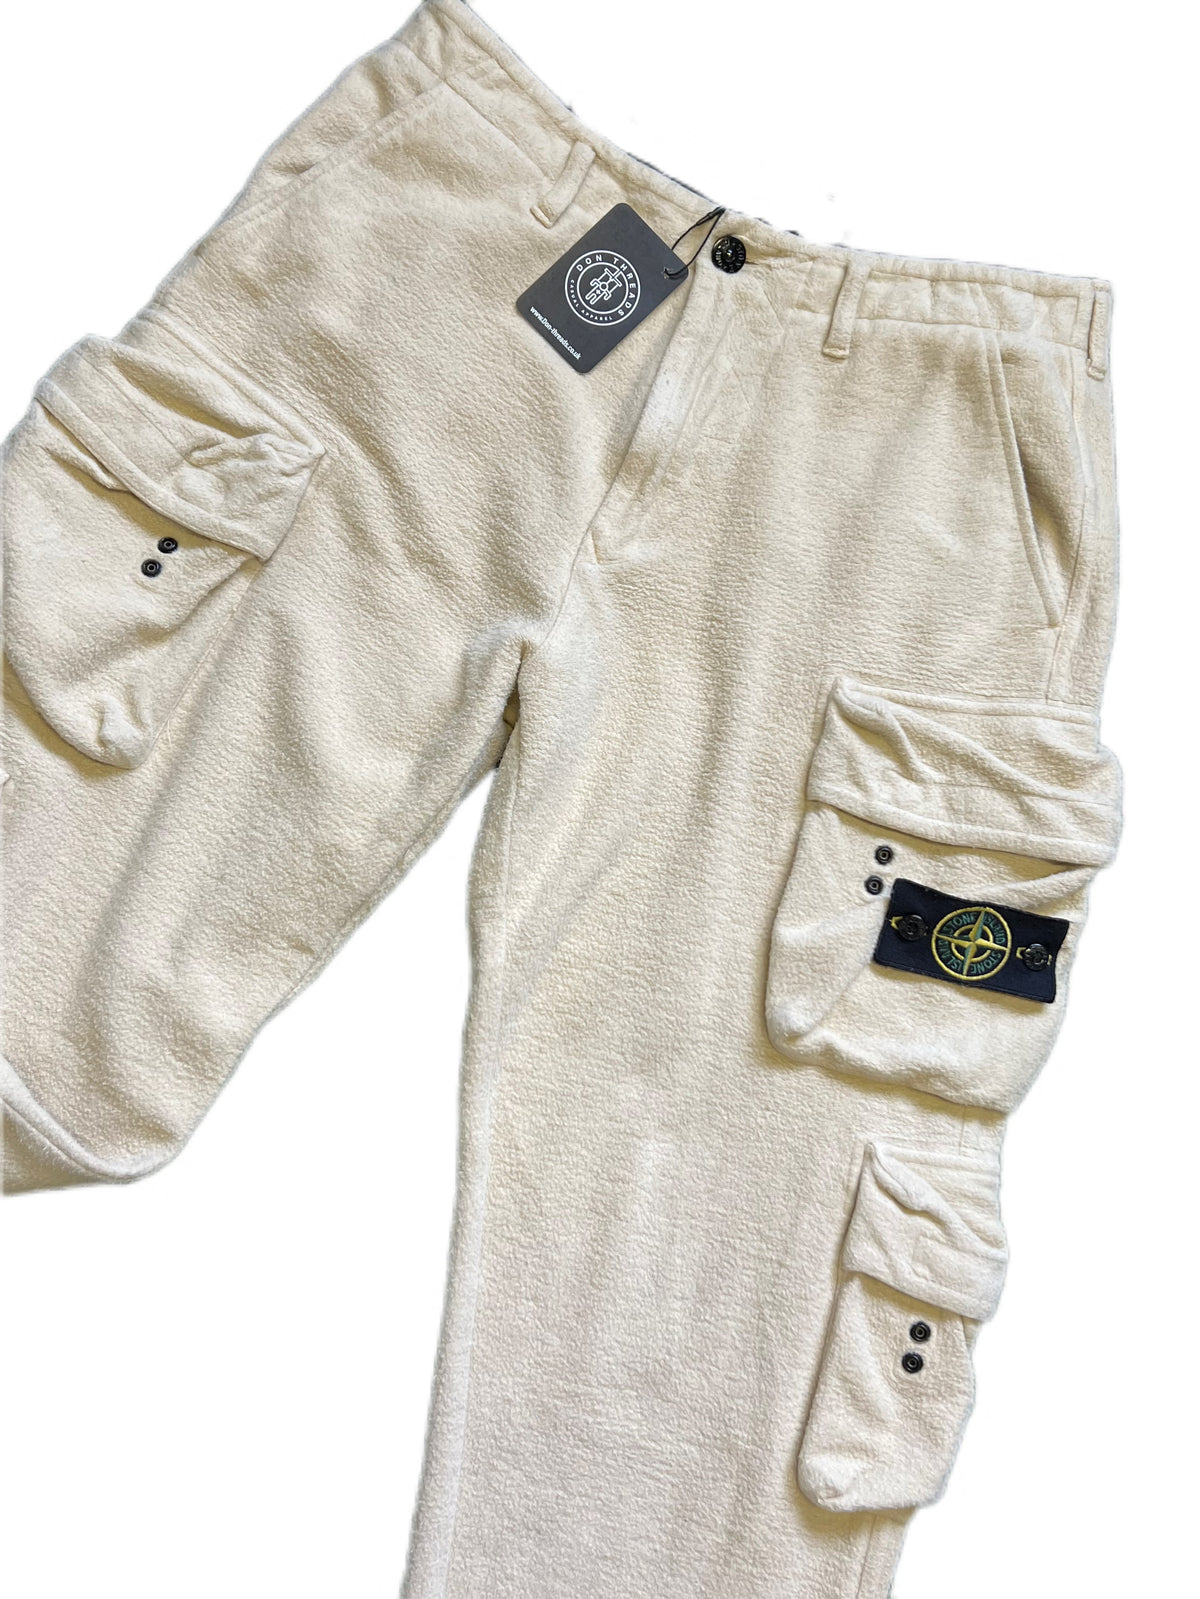 Stone Island Multiple Pocket Comfort Fit Fleece Cargos Trousers Type CO